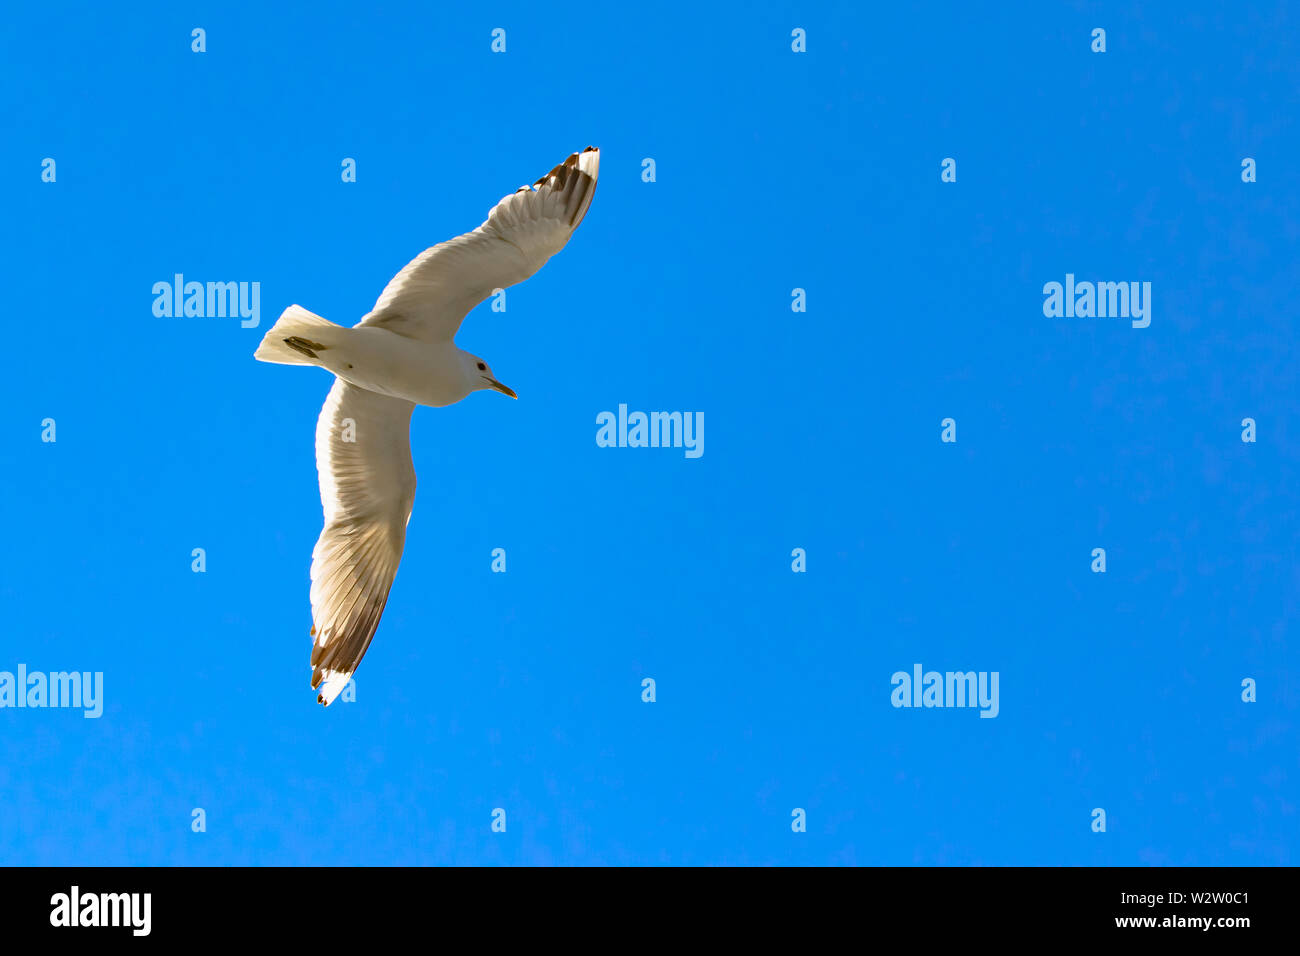 Mouette en vol contre un ciel bleu clair qu'il en a l'air du hareng dans l'archipel de la Finlande. Banque D'Images